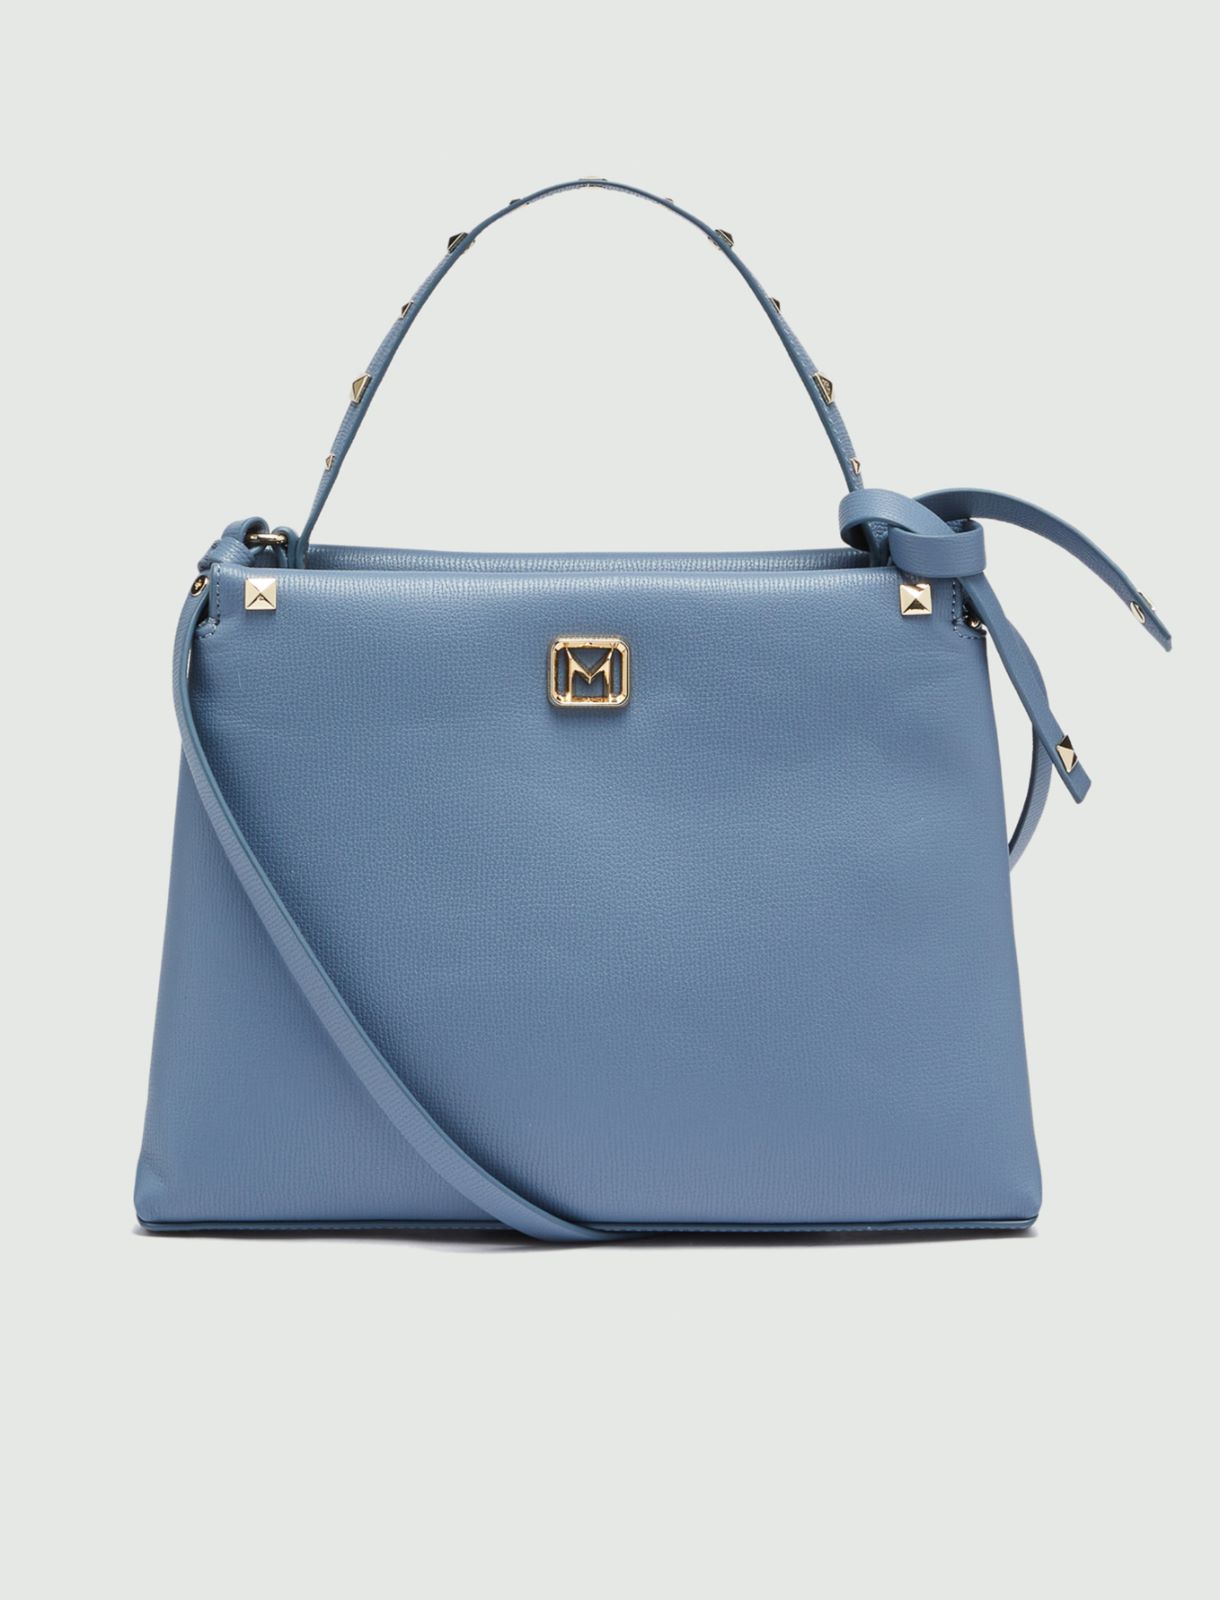 Small bag - Light blue - Marella